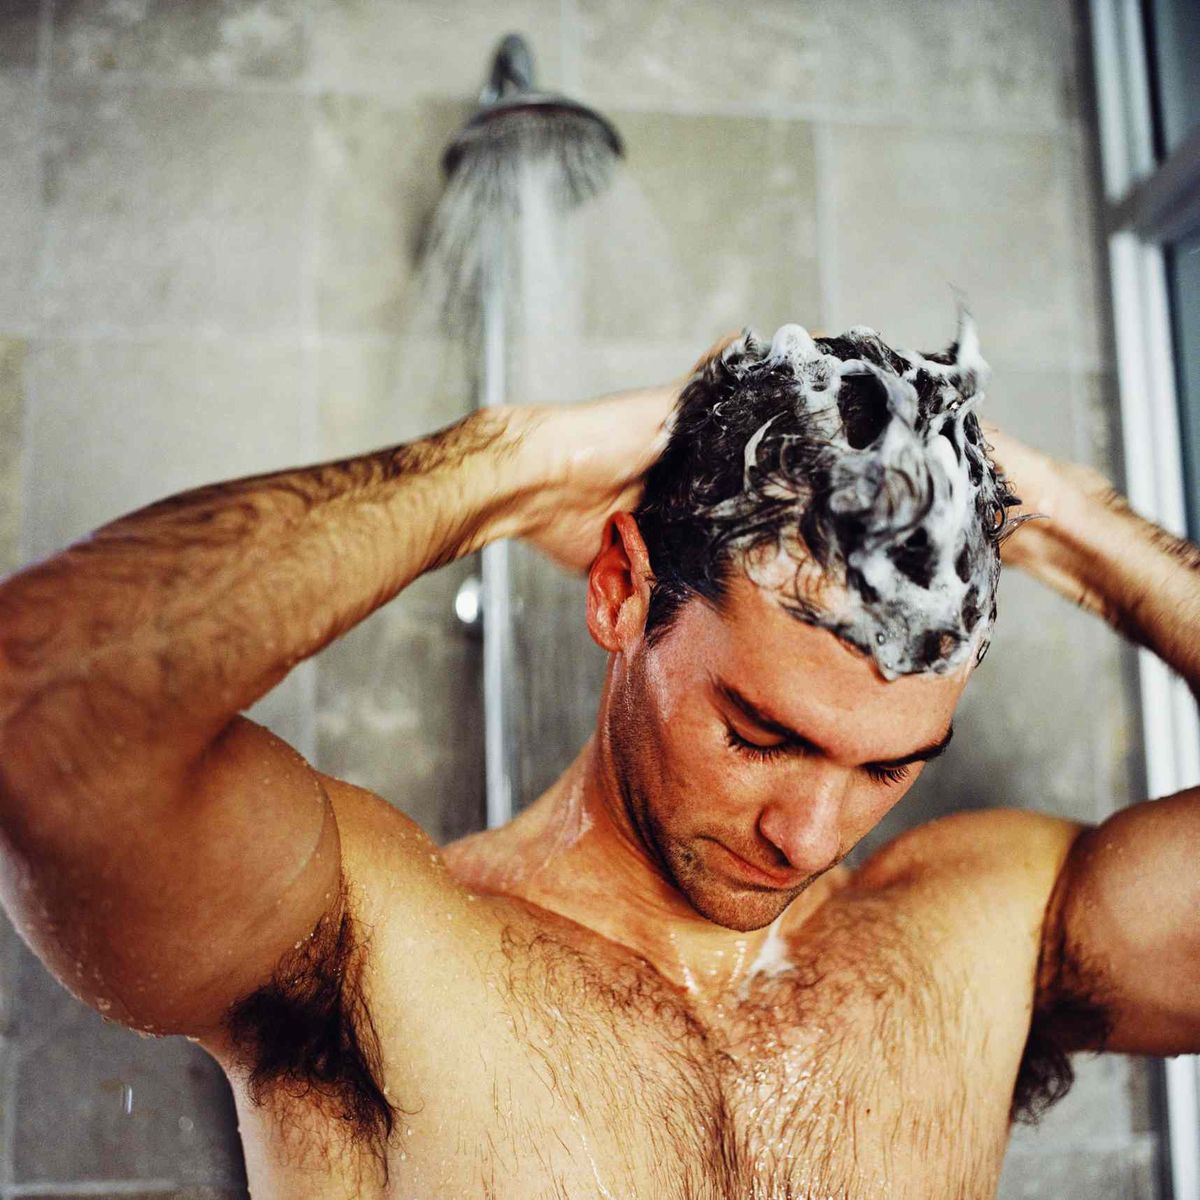 mies pesee hiuksensa suihkussa